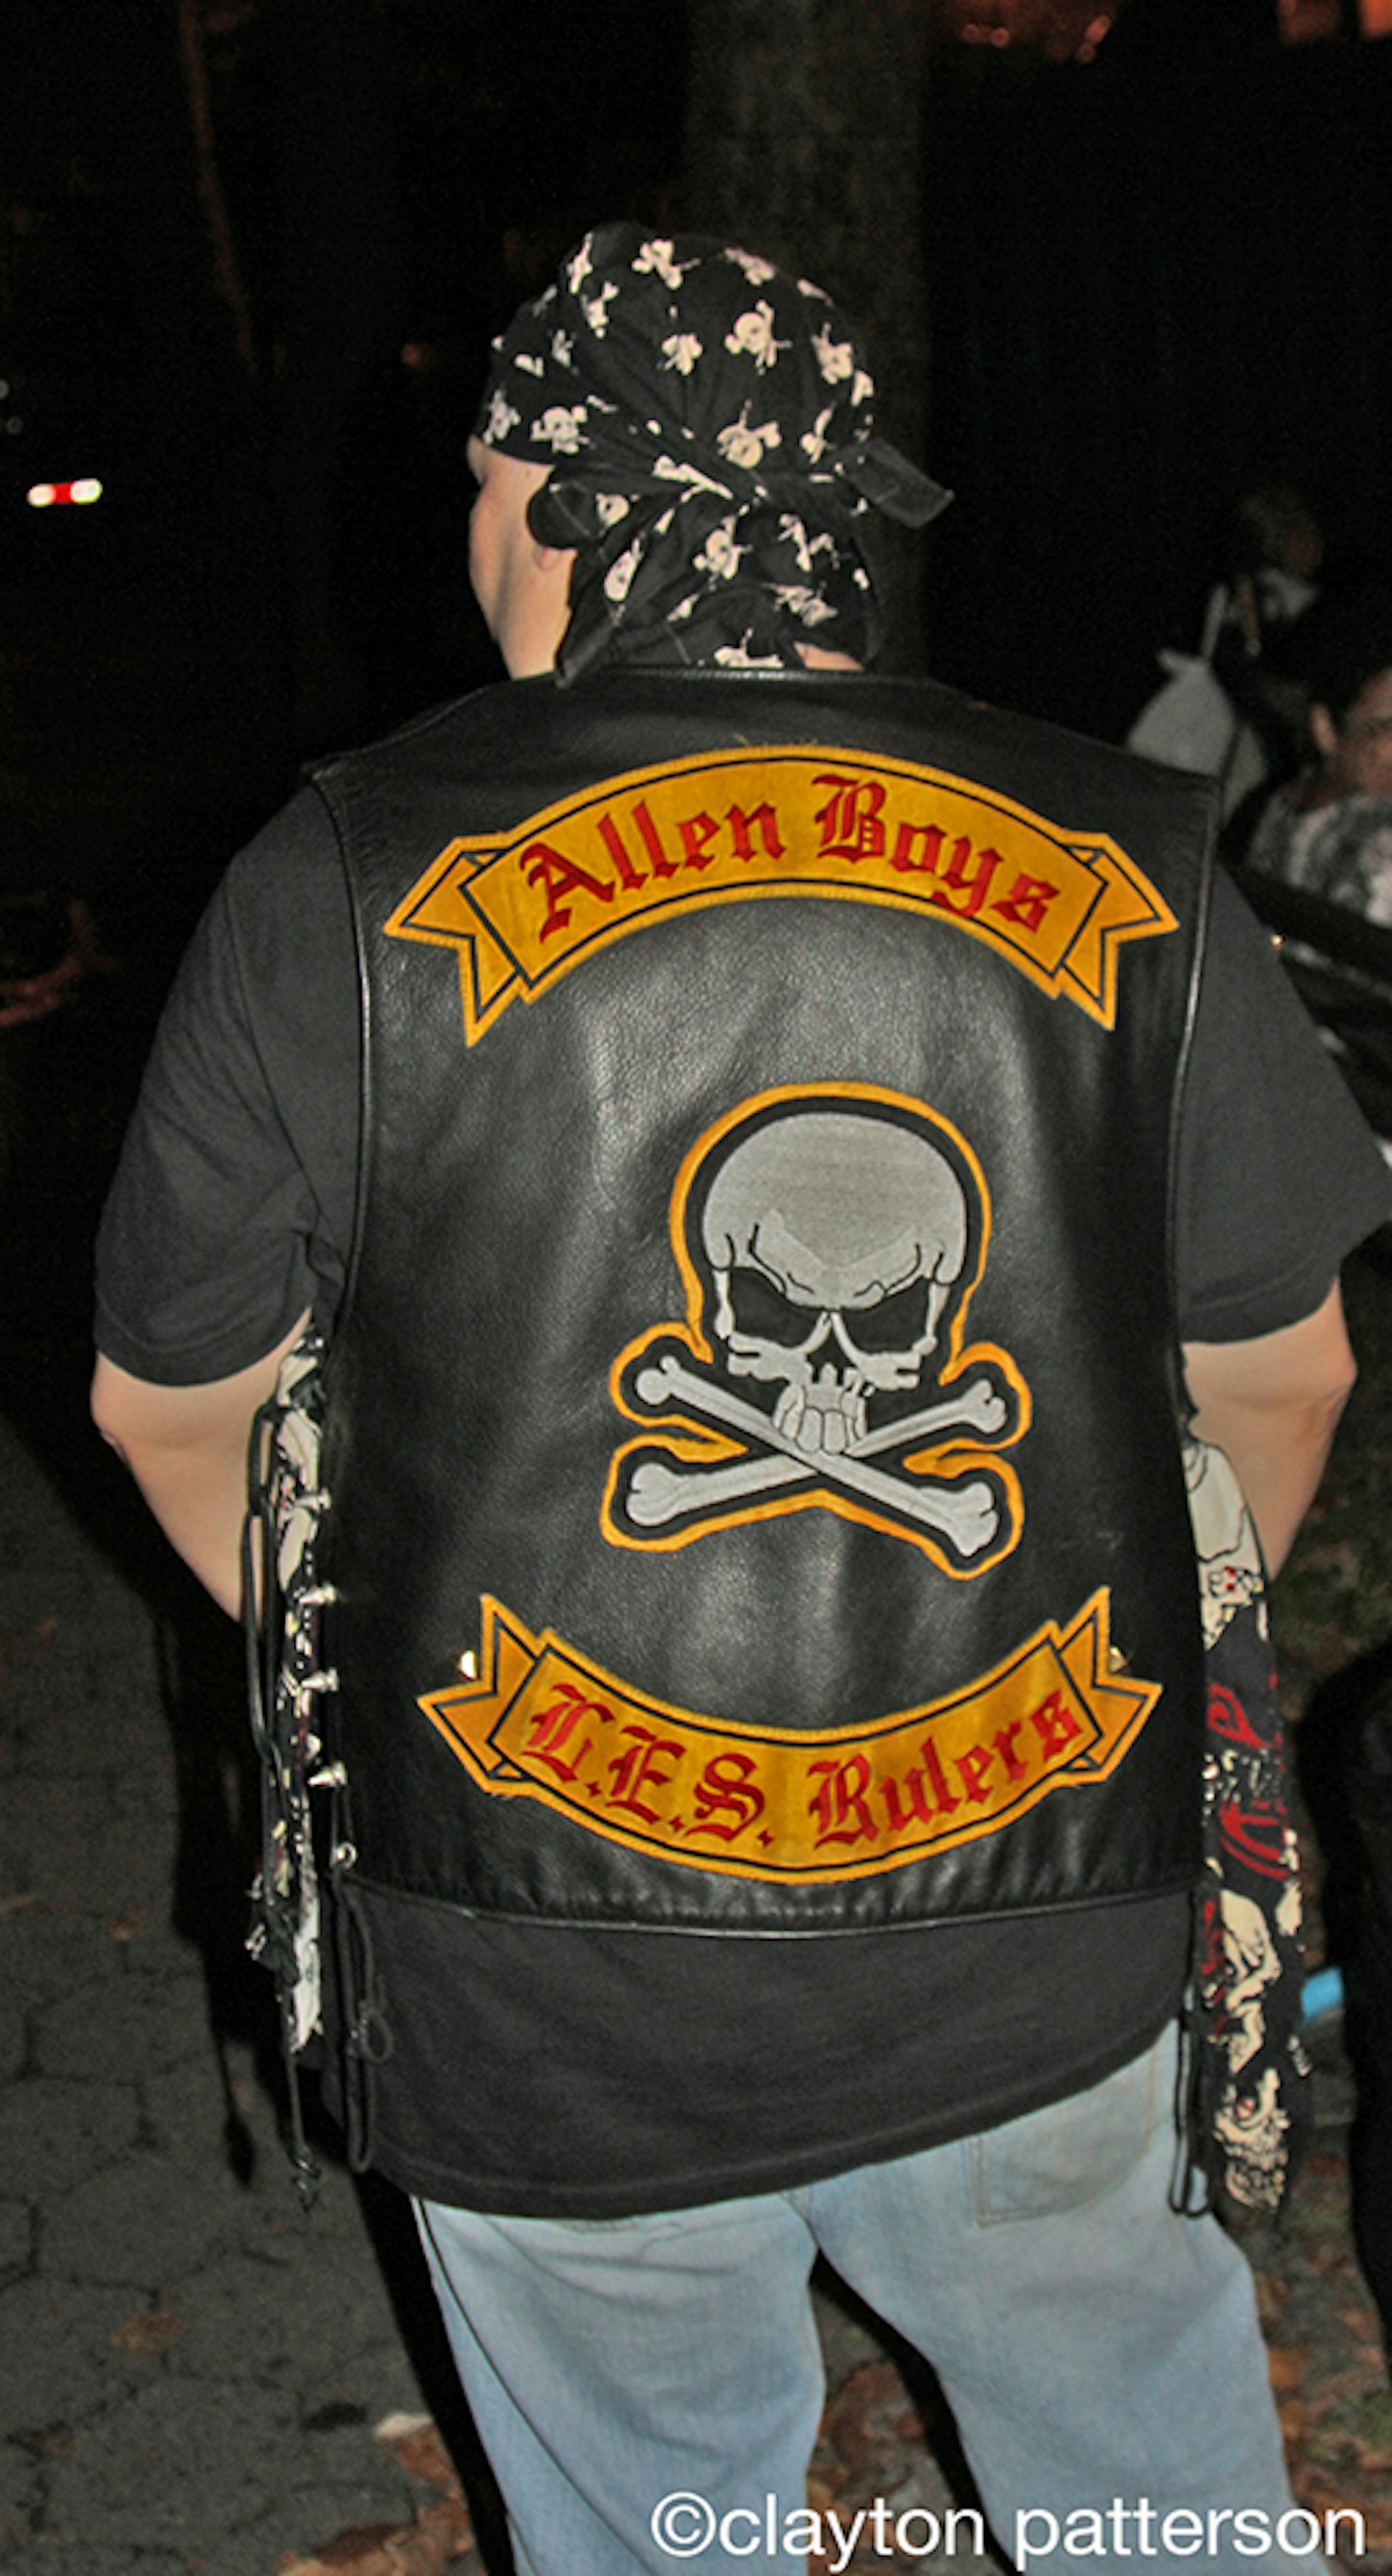 A member of the Allen Boys.